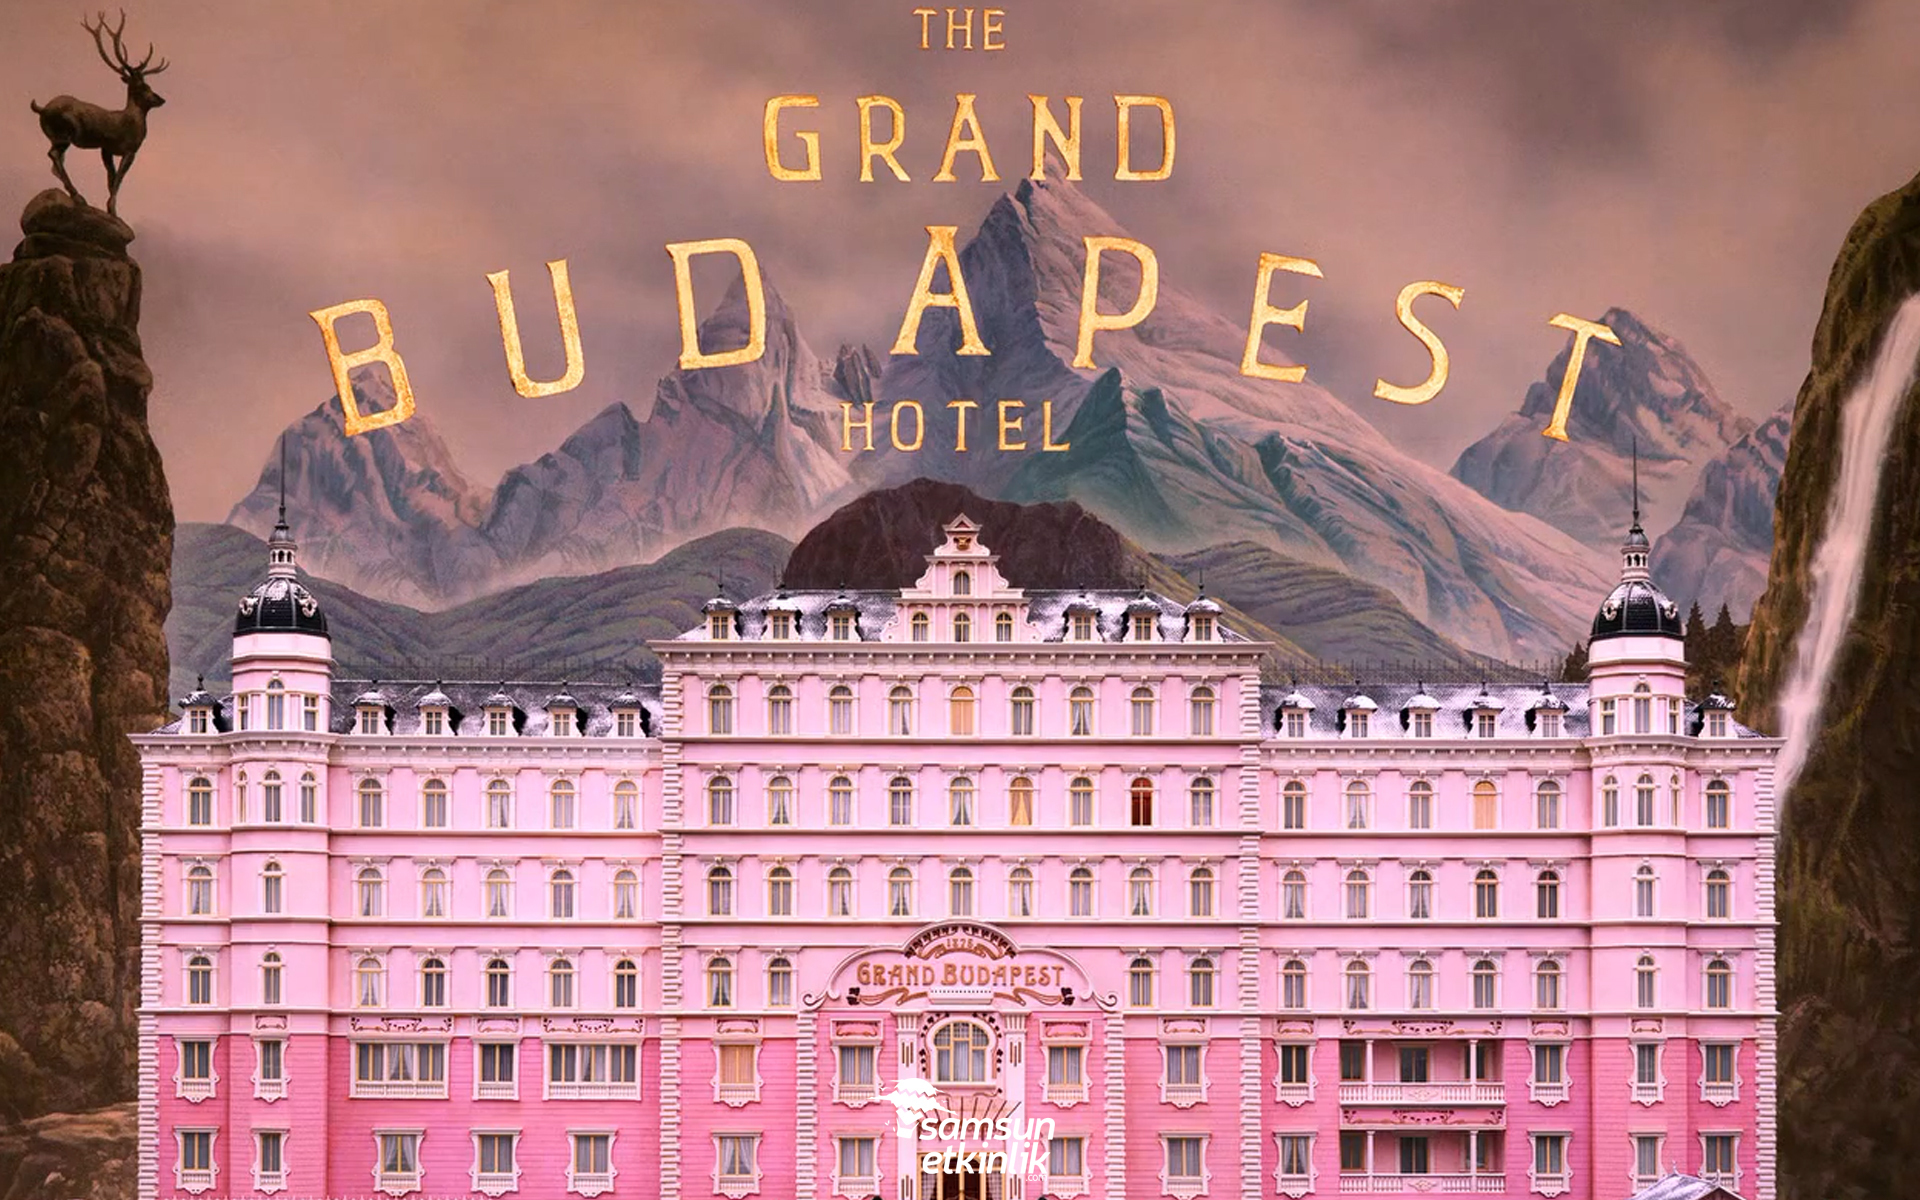 Büyük Budapeşte Oteli (The Grand Budapest Hotel)